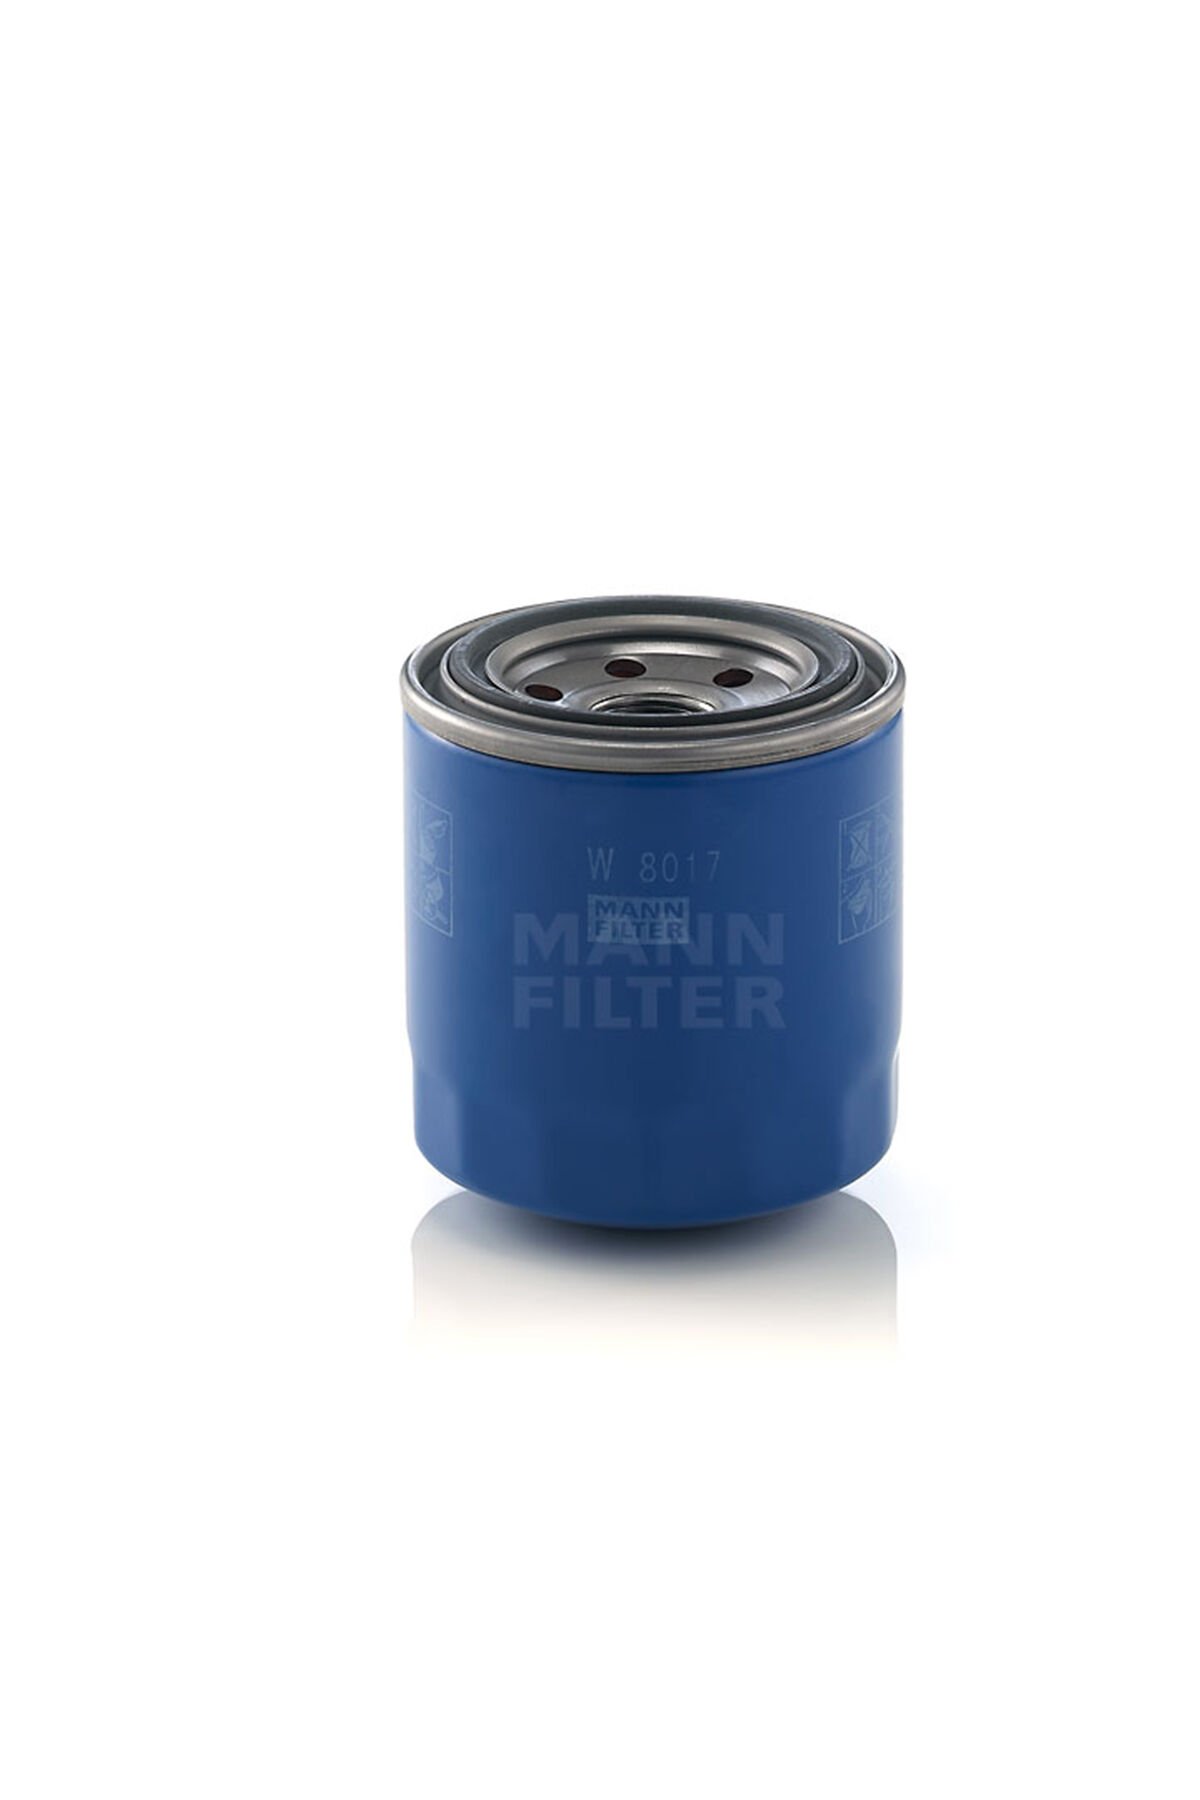 Kia Sportage 1.6 GDI Benzinli Yağ Filtresi 2011-2015 Mann Filter